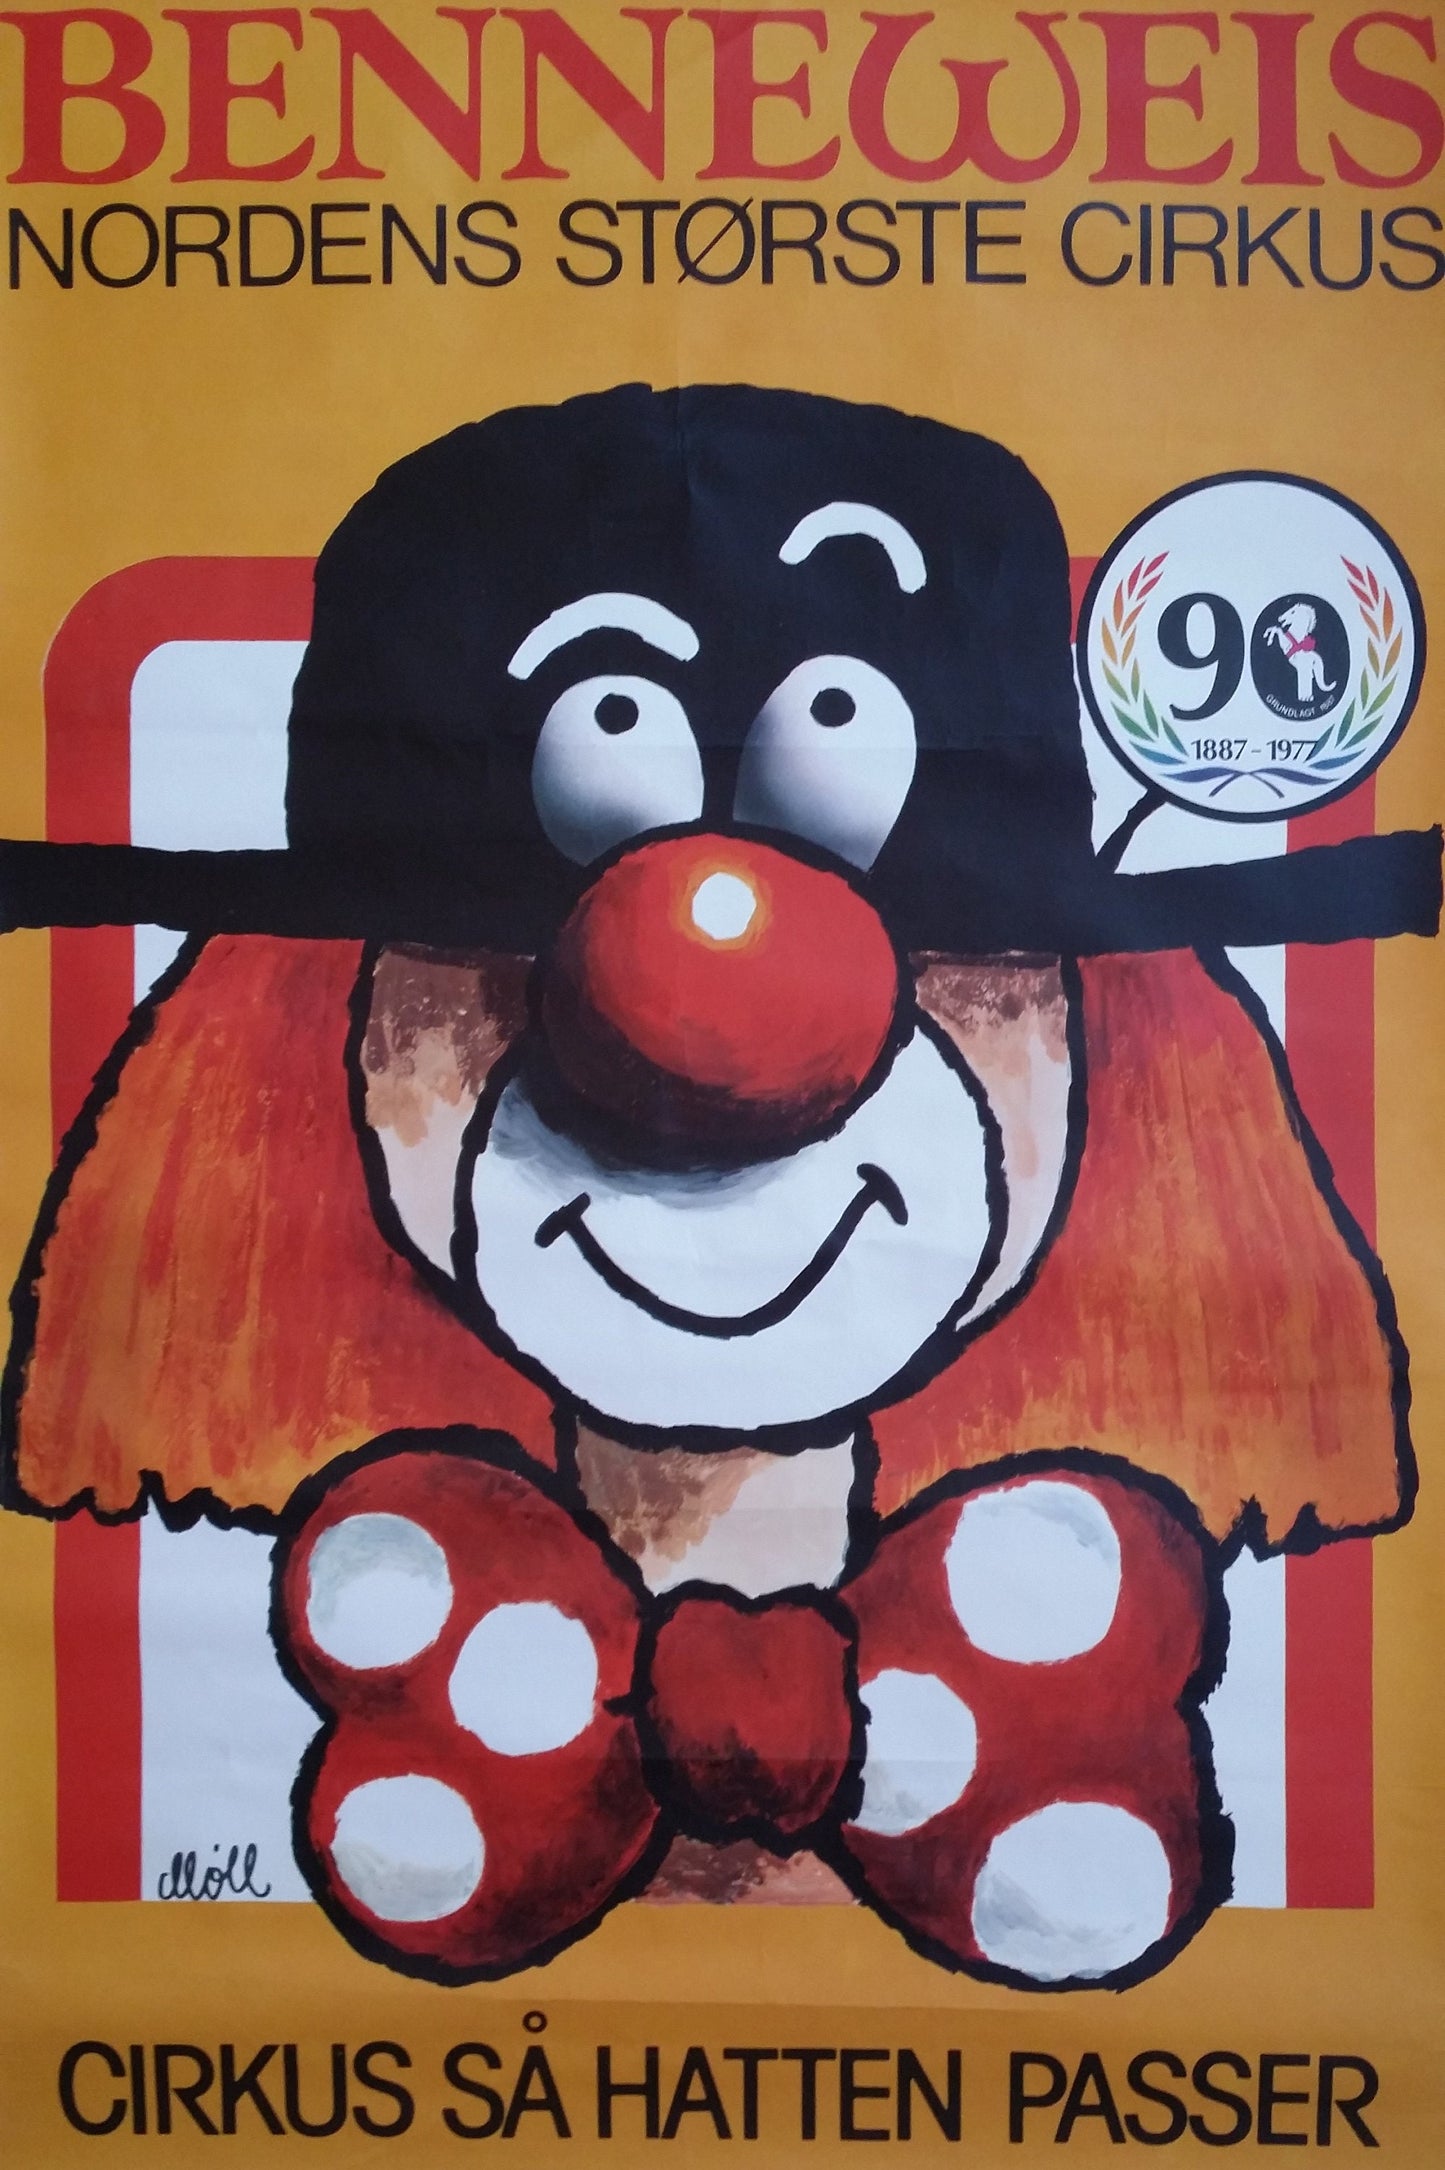 1977 Circus Benneweis "90 Years Anniversary" - Original Vintage Poster